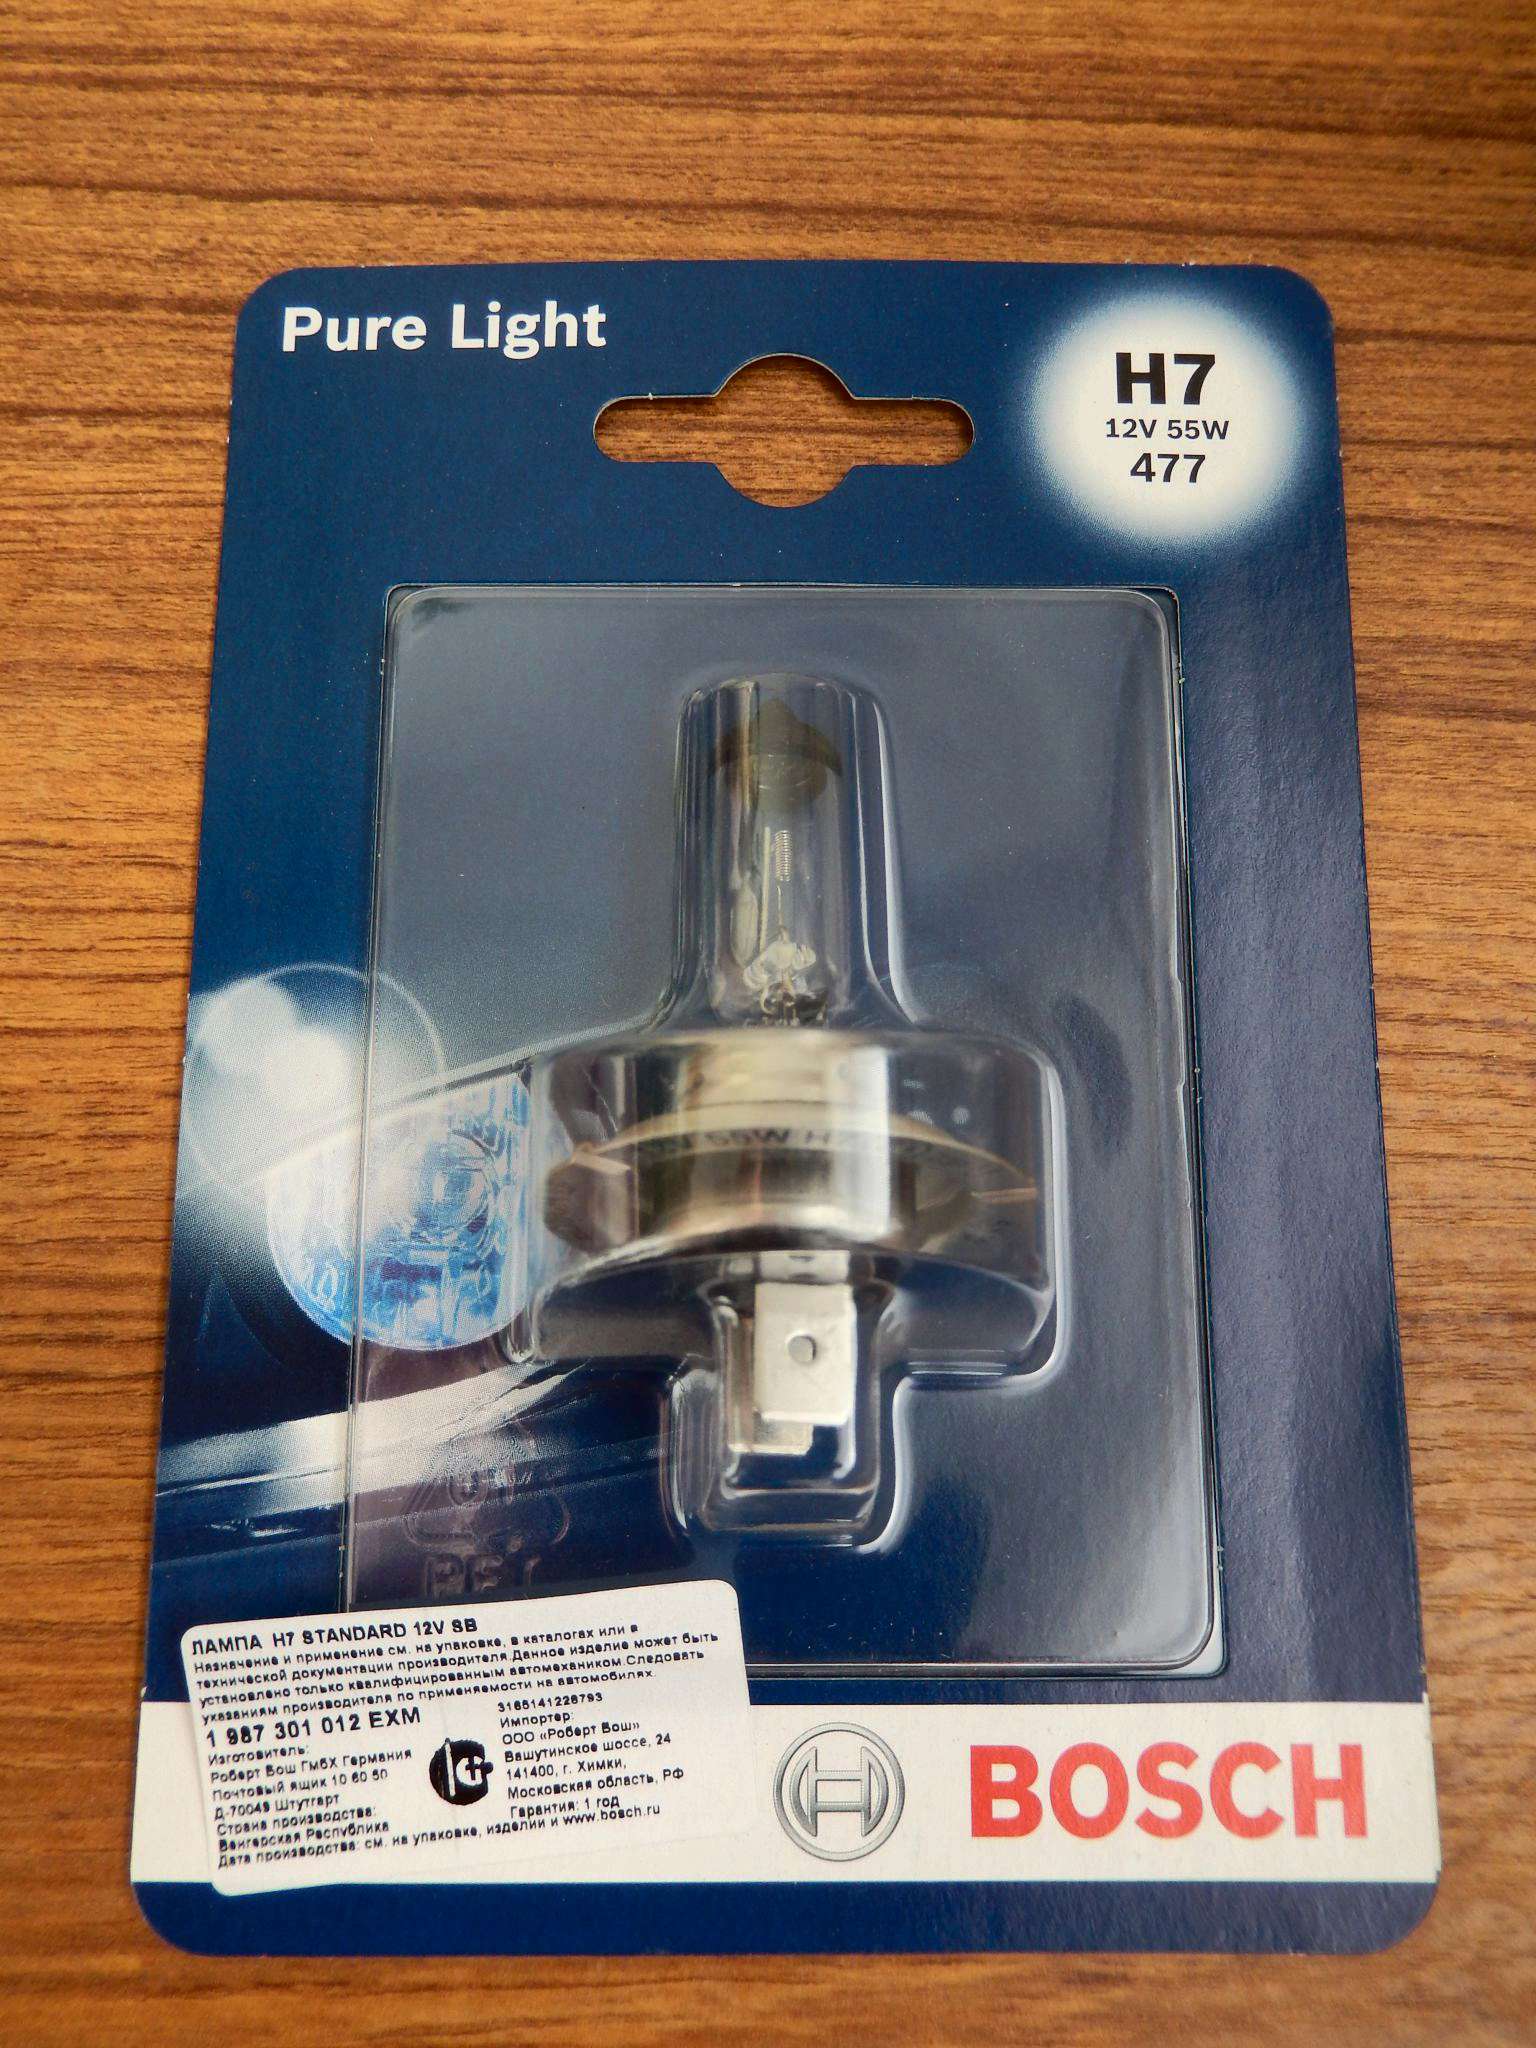 Spuldze Bosch H7 Purelight 1987301012 for sale online